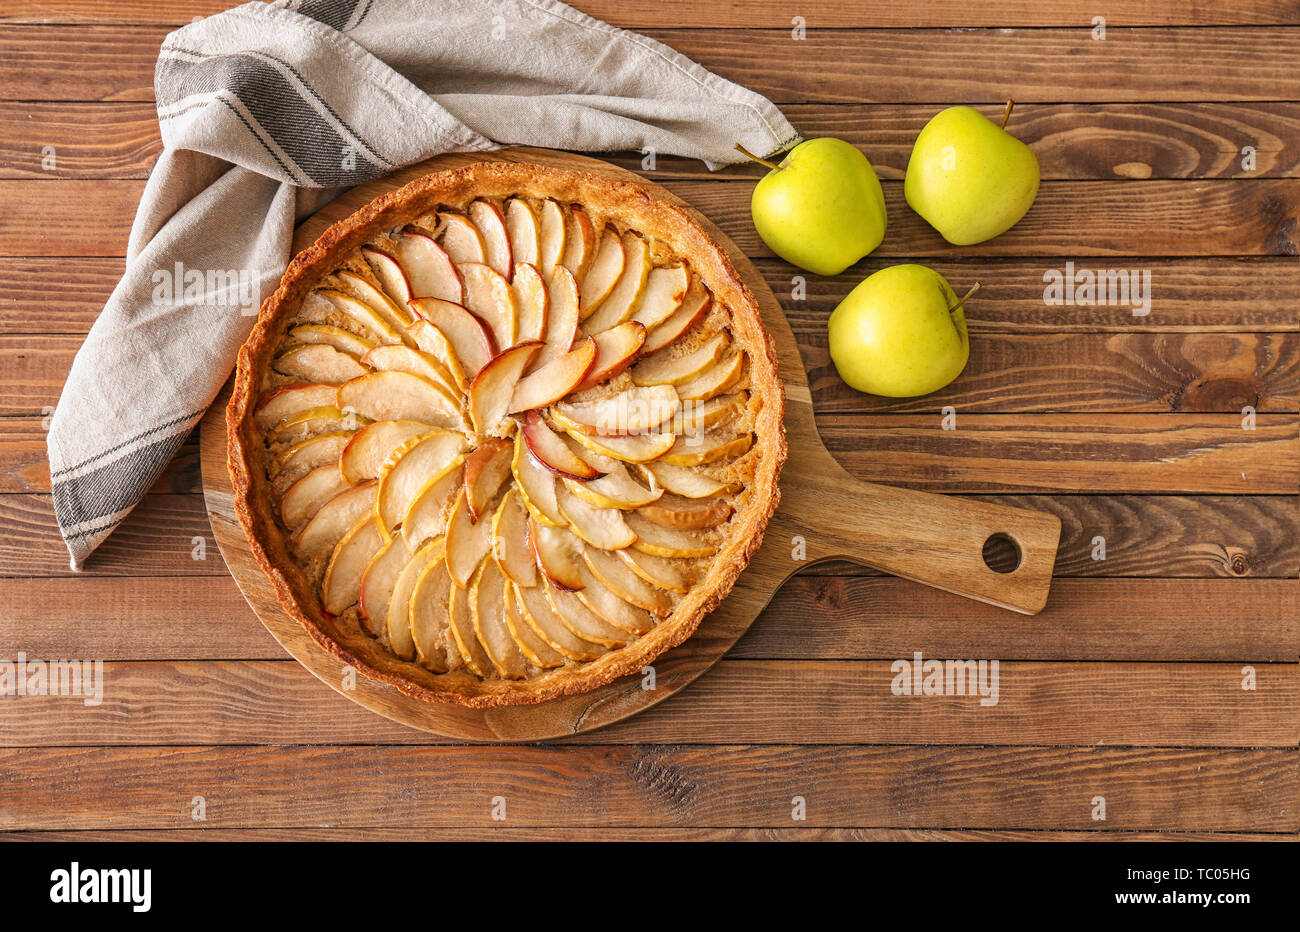 Tasty apple pie on wooden table Stock Photo - Alamy